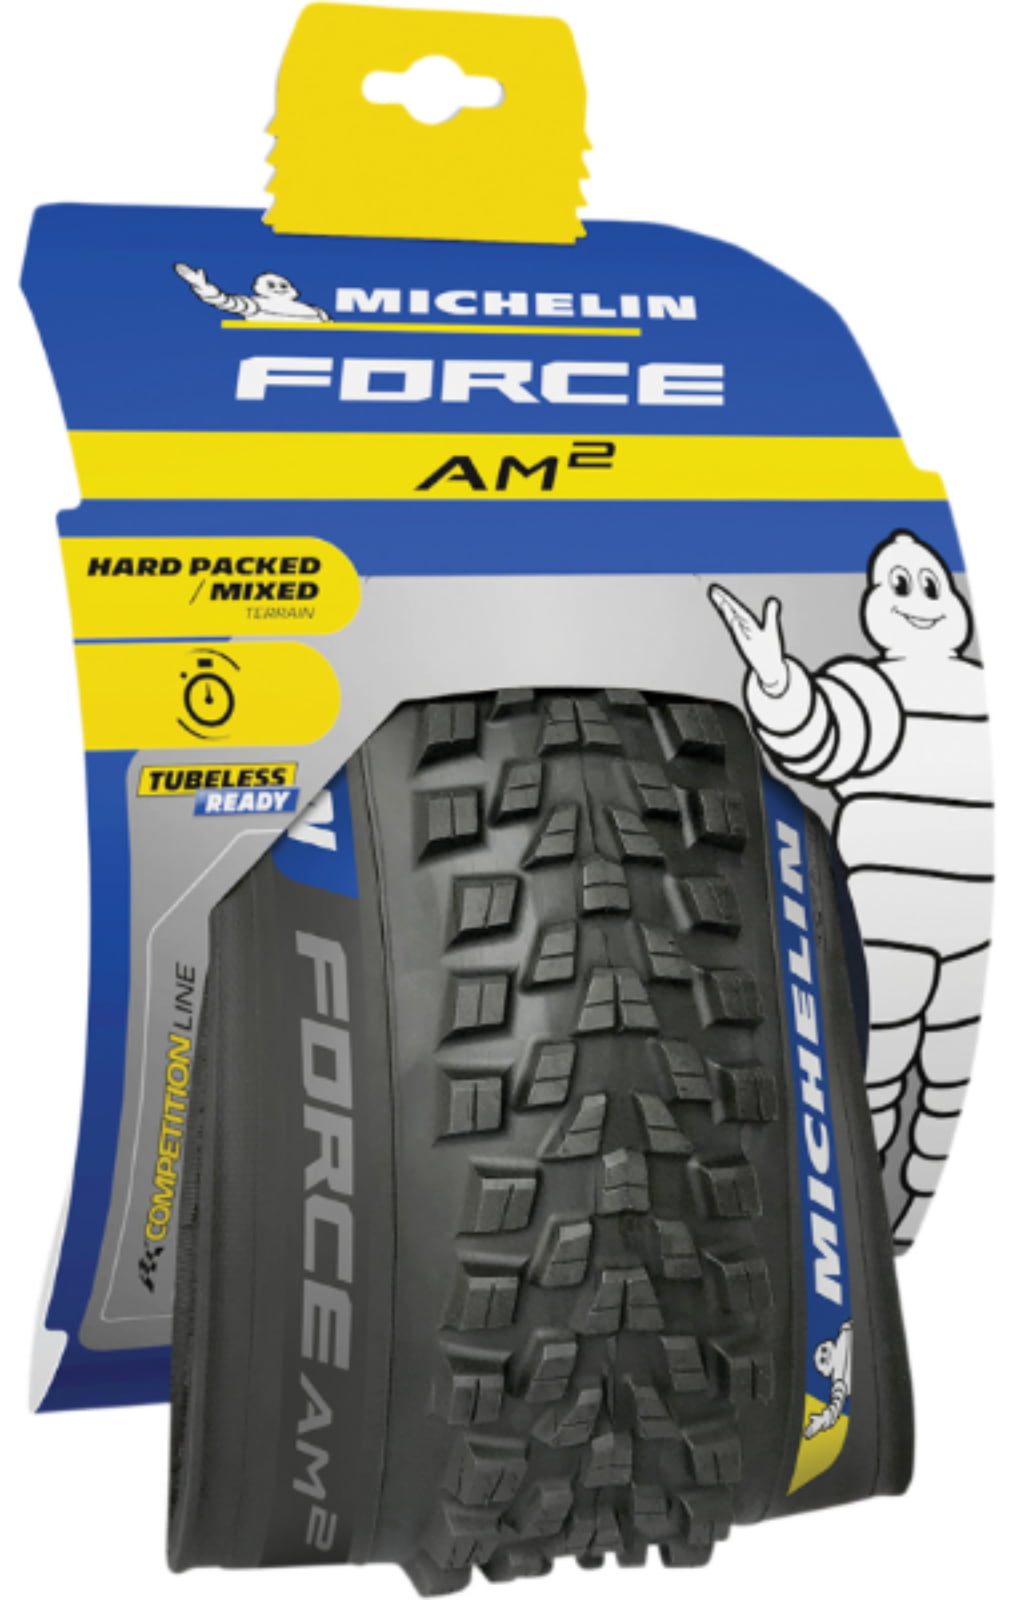 Michelin Force AM2 Mountain Bike Tire 29x2.60 (36842)